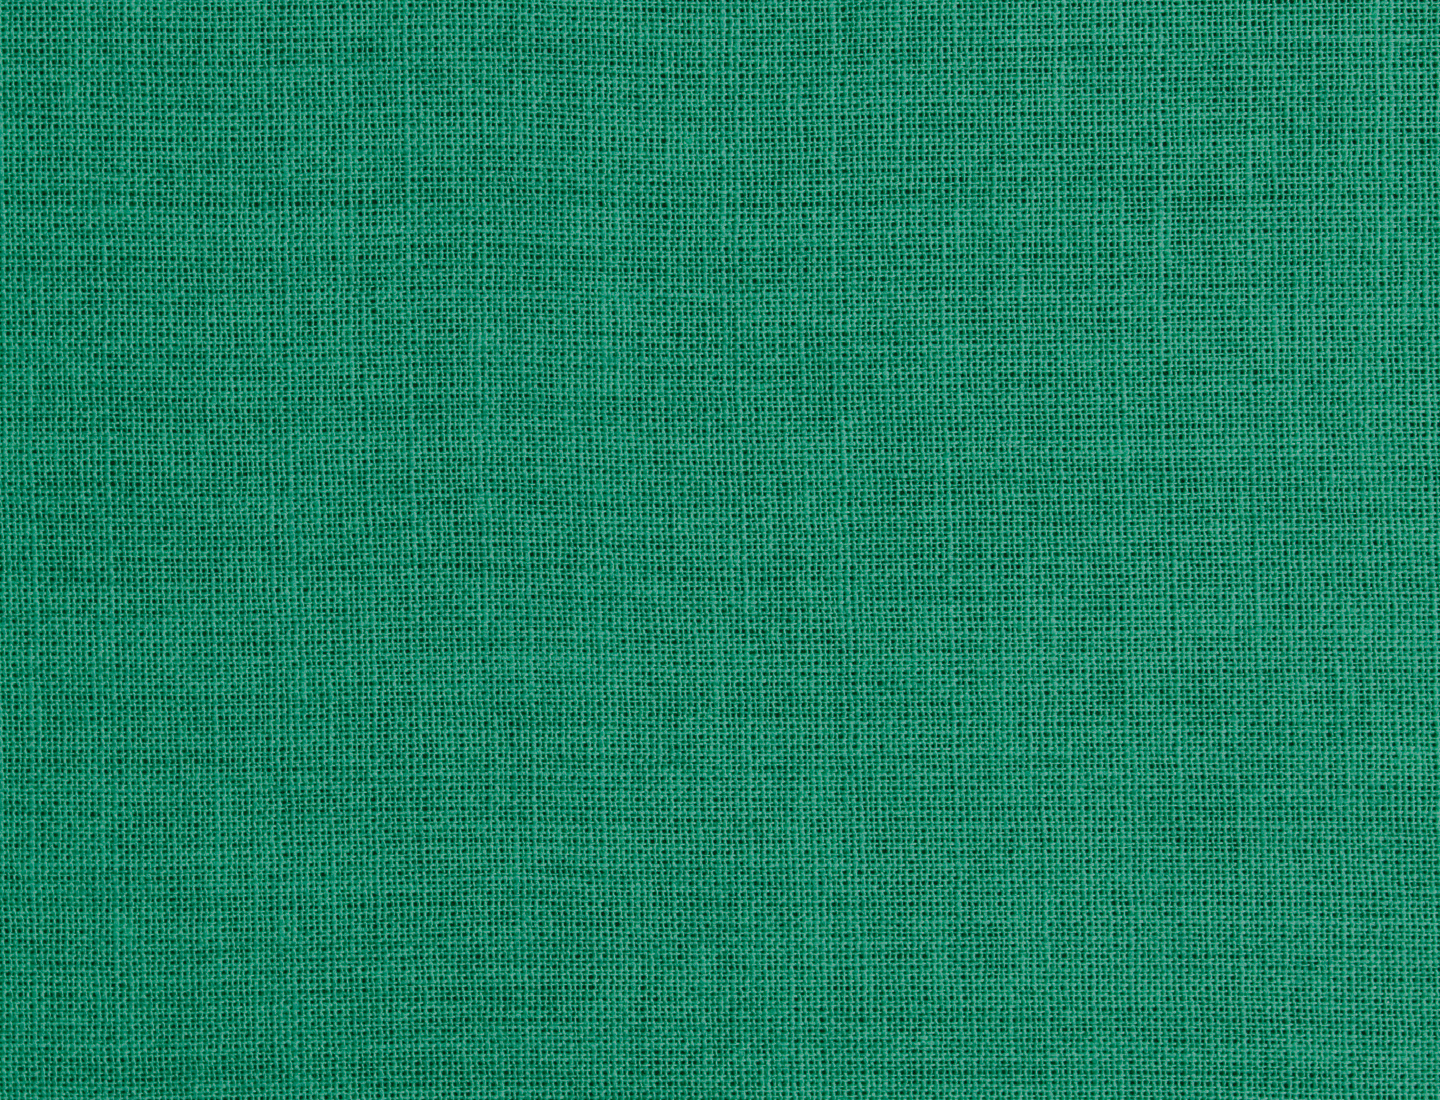 Emerald Cloth over Board, (Limited Edition)